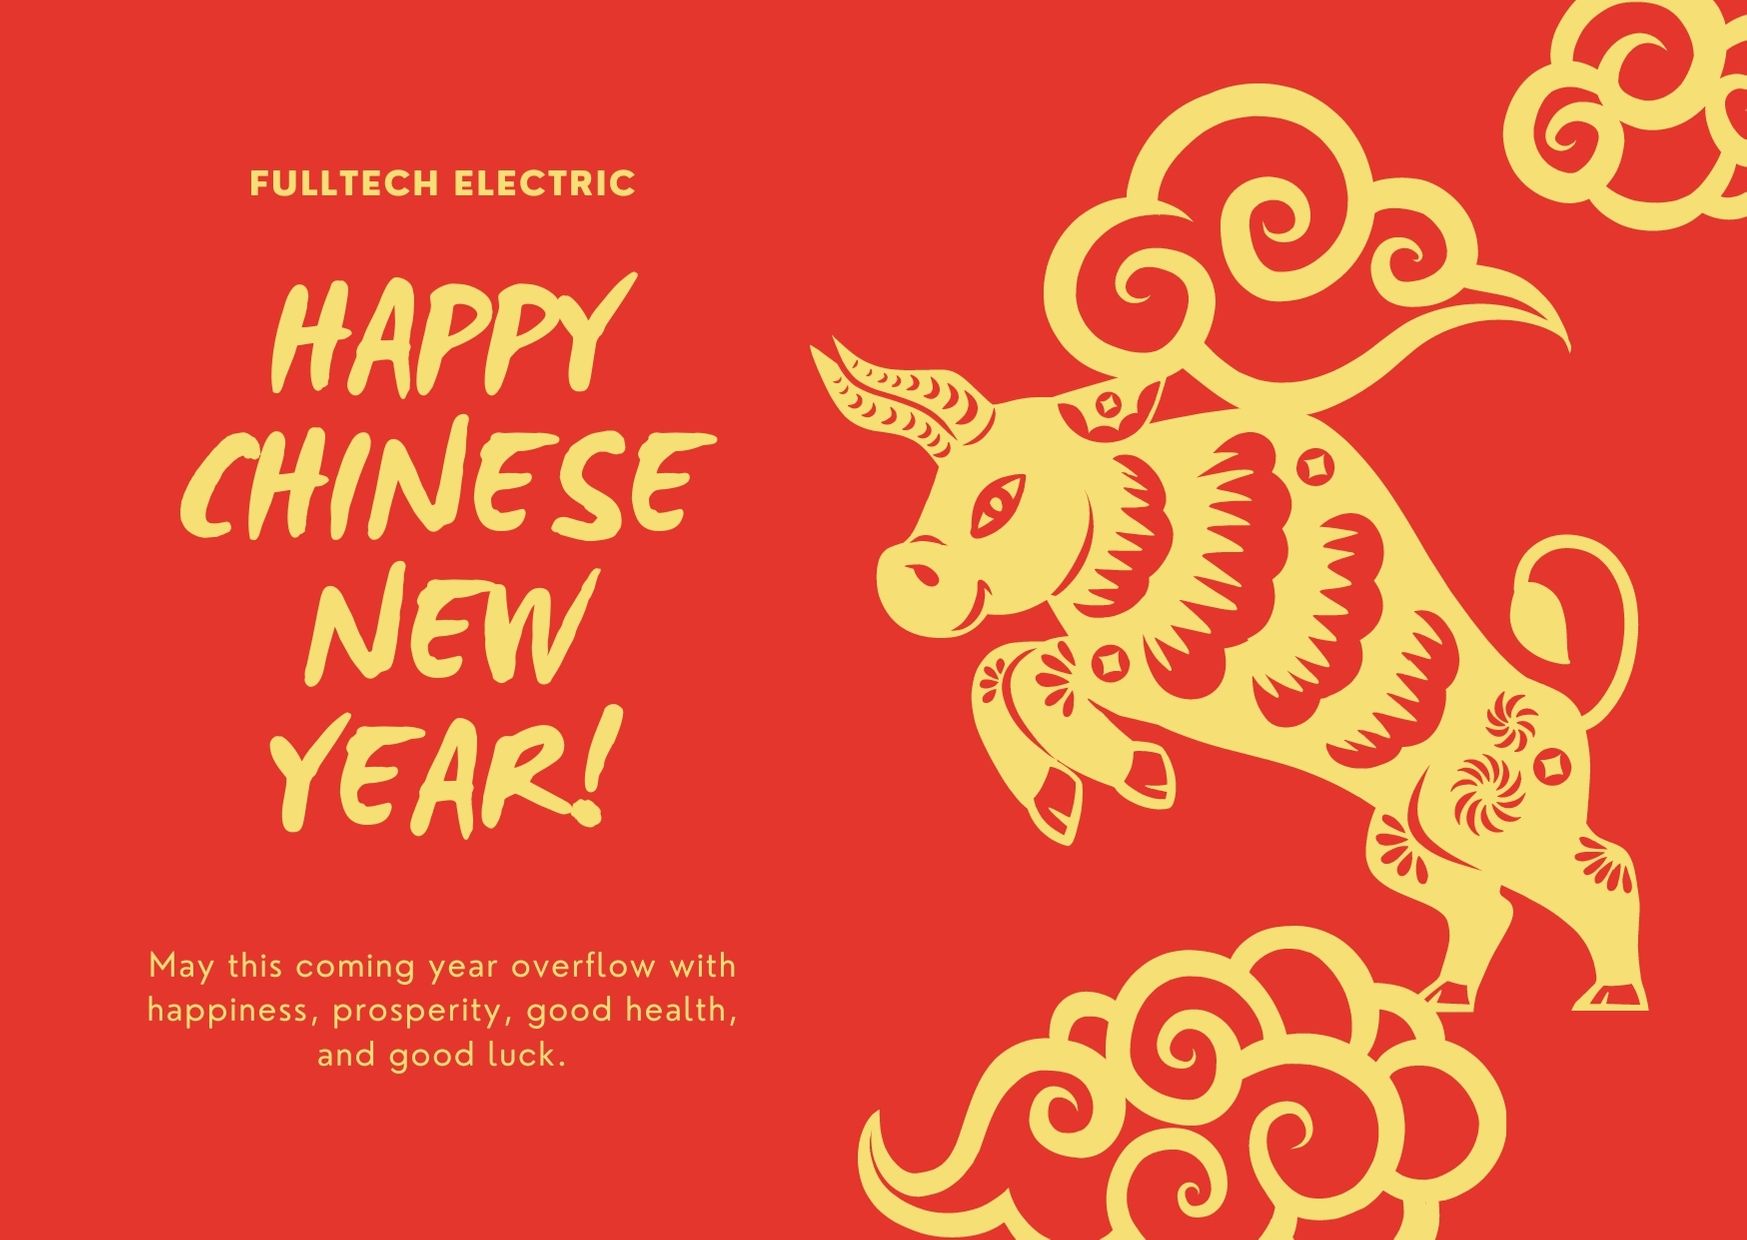 Chinesische Neujahrsfeiertage (Feb. 10th - Feb. 16th, 2021) - Fulltech Electric